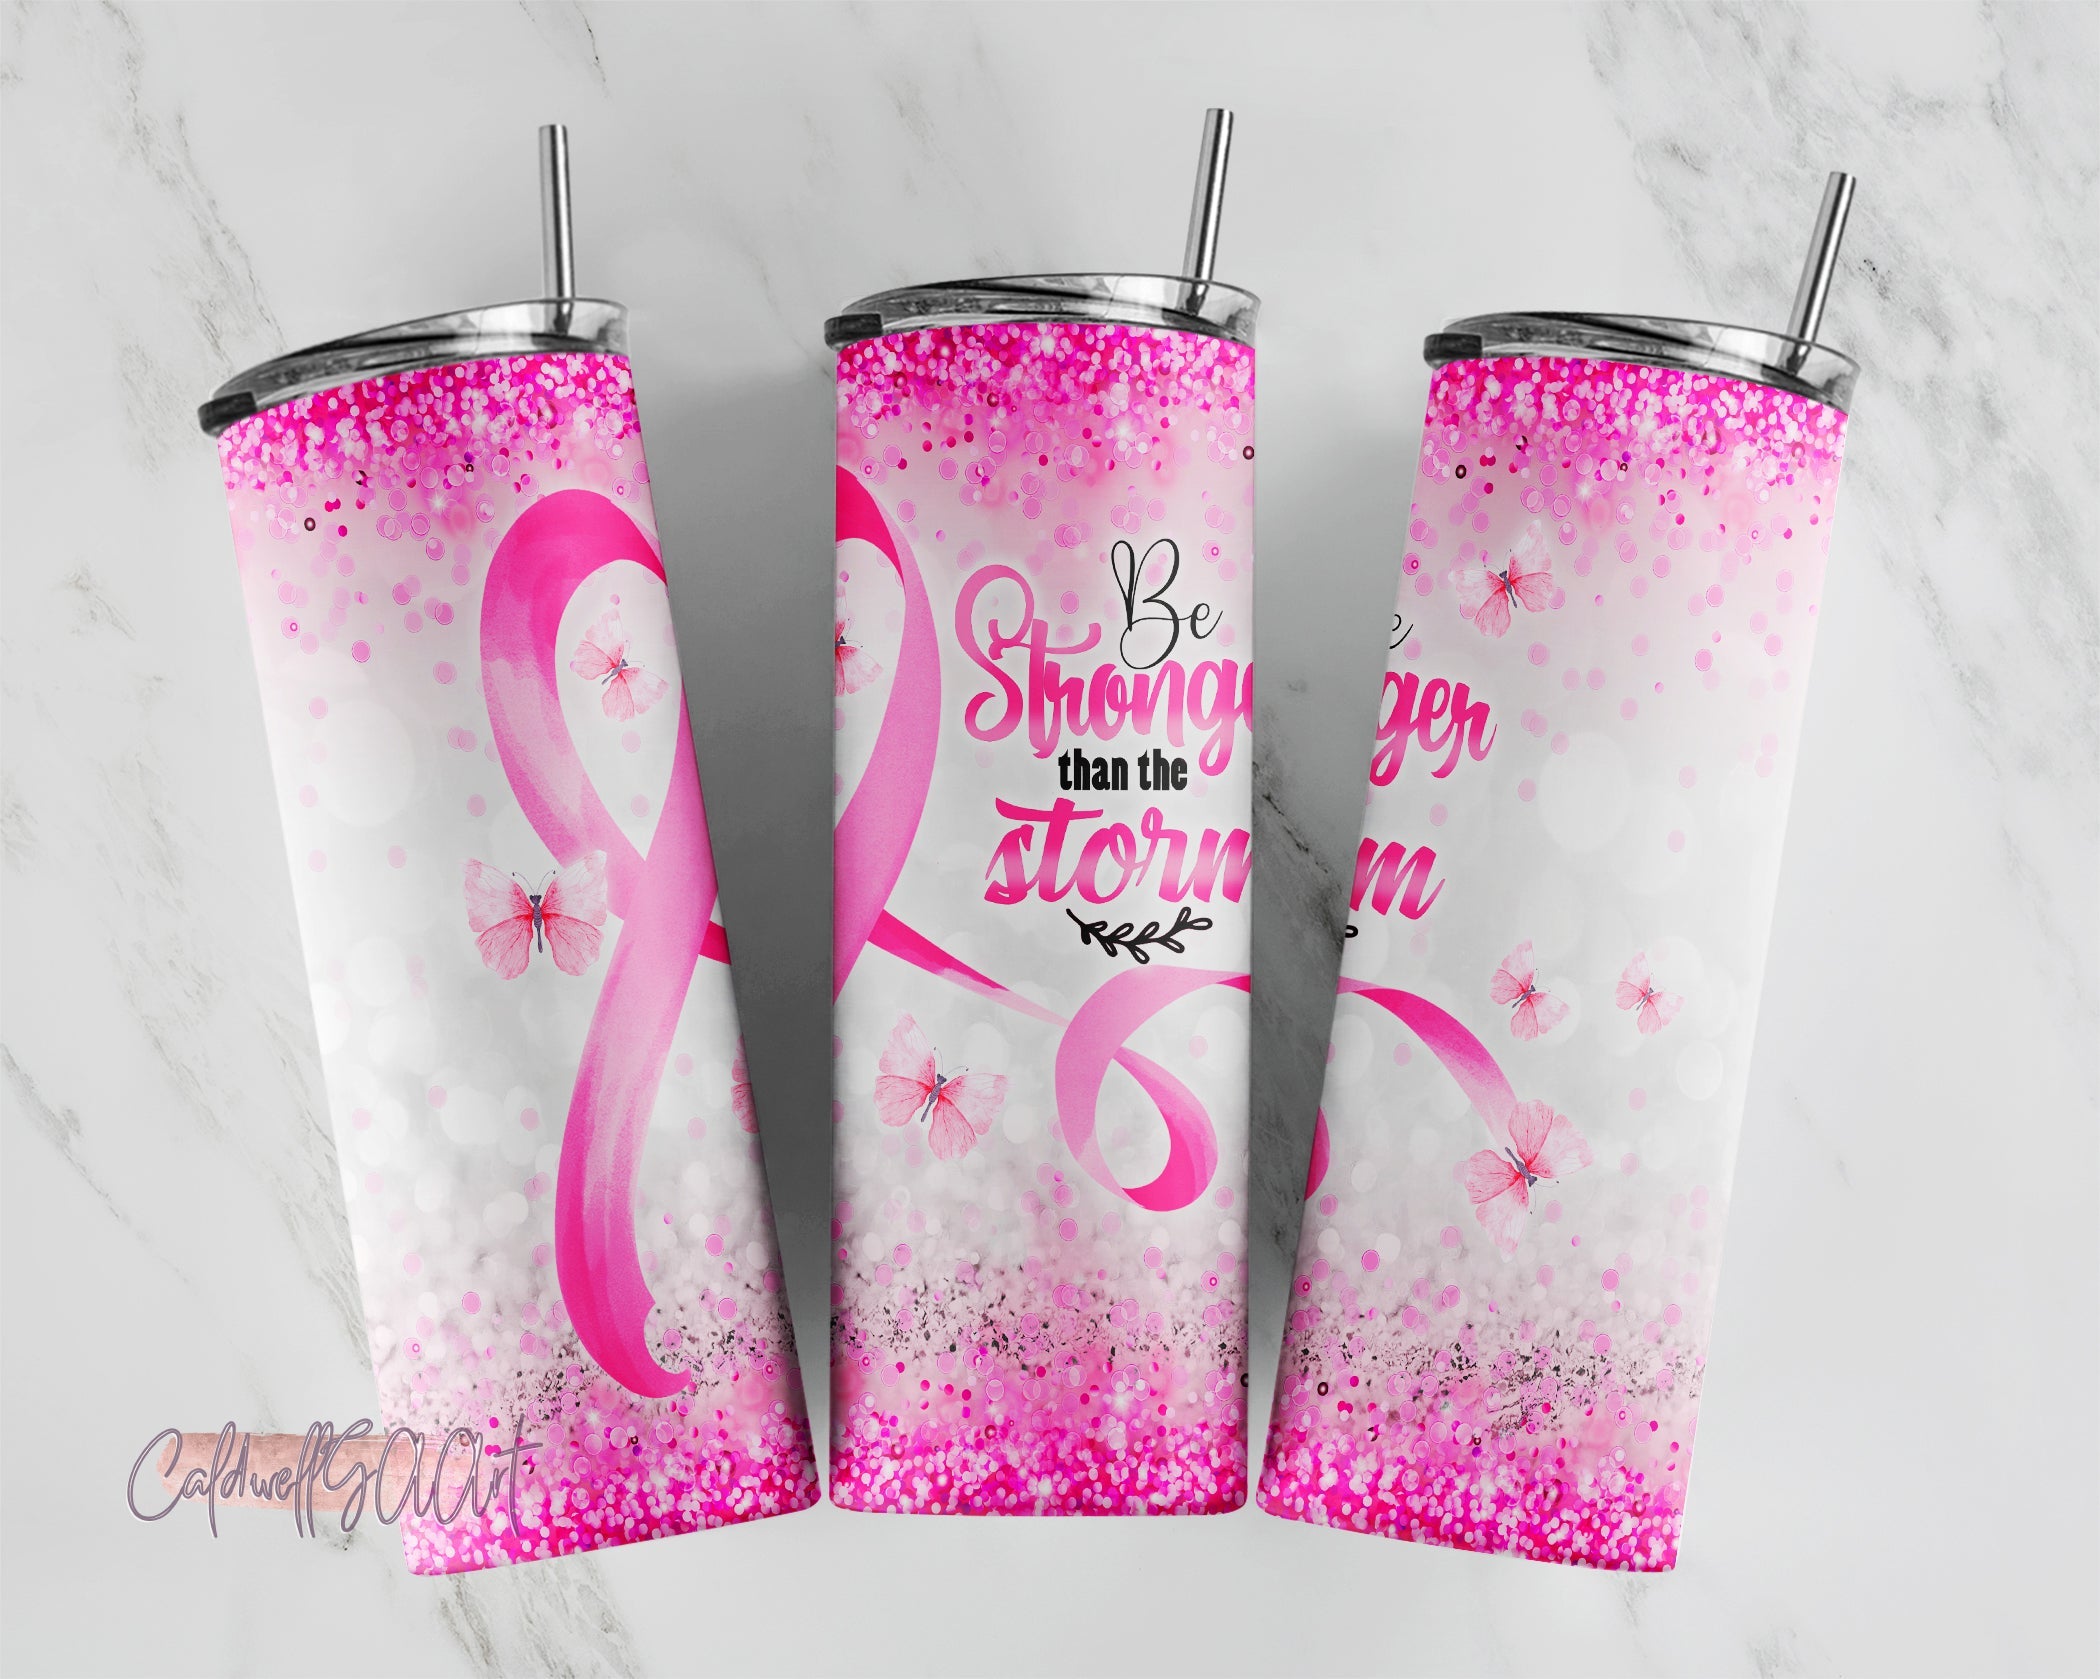 Glitter HTV - Light Pink – Stewart Inks